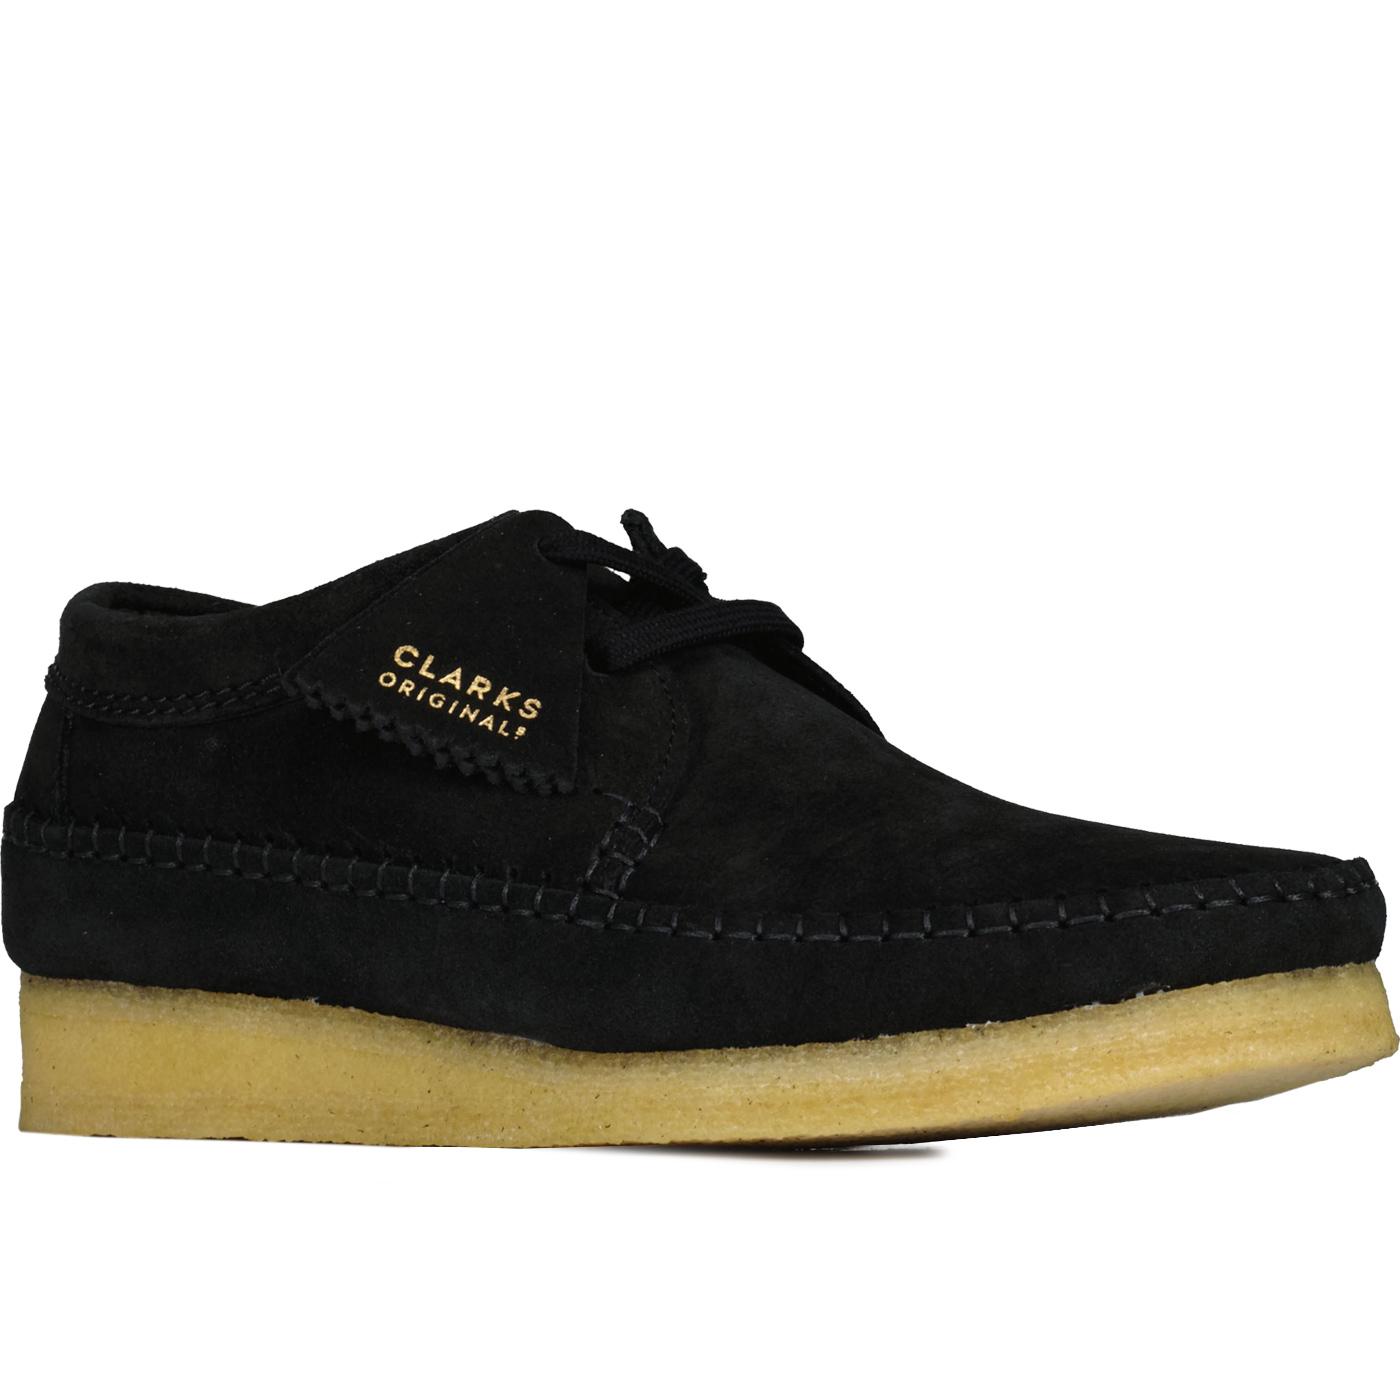 Weaver CLARKS ORIGINALS Black Suede Moccasin Shoes